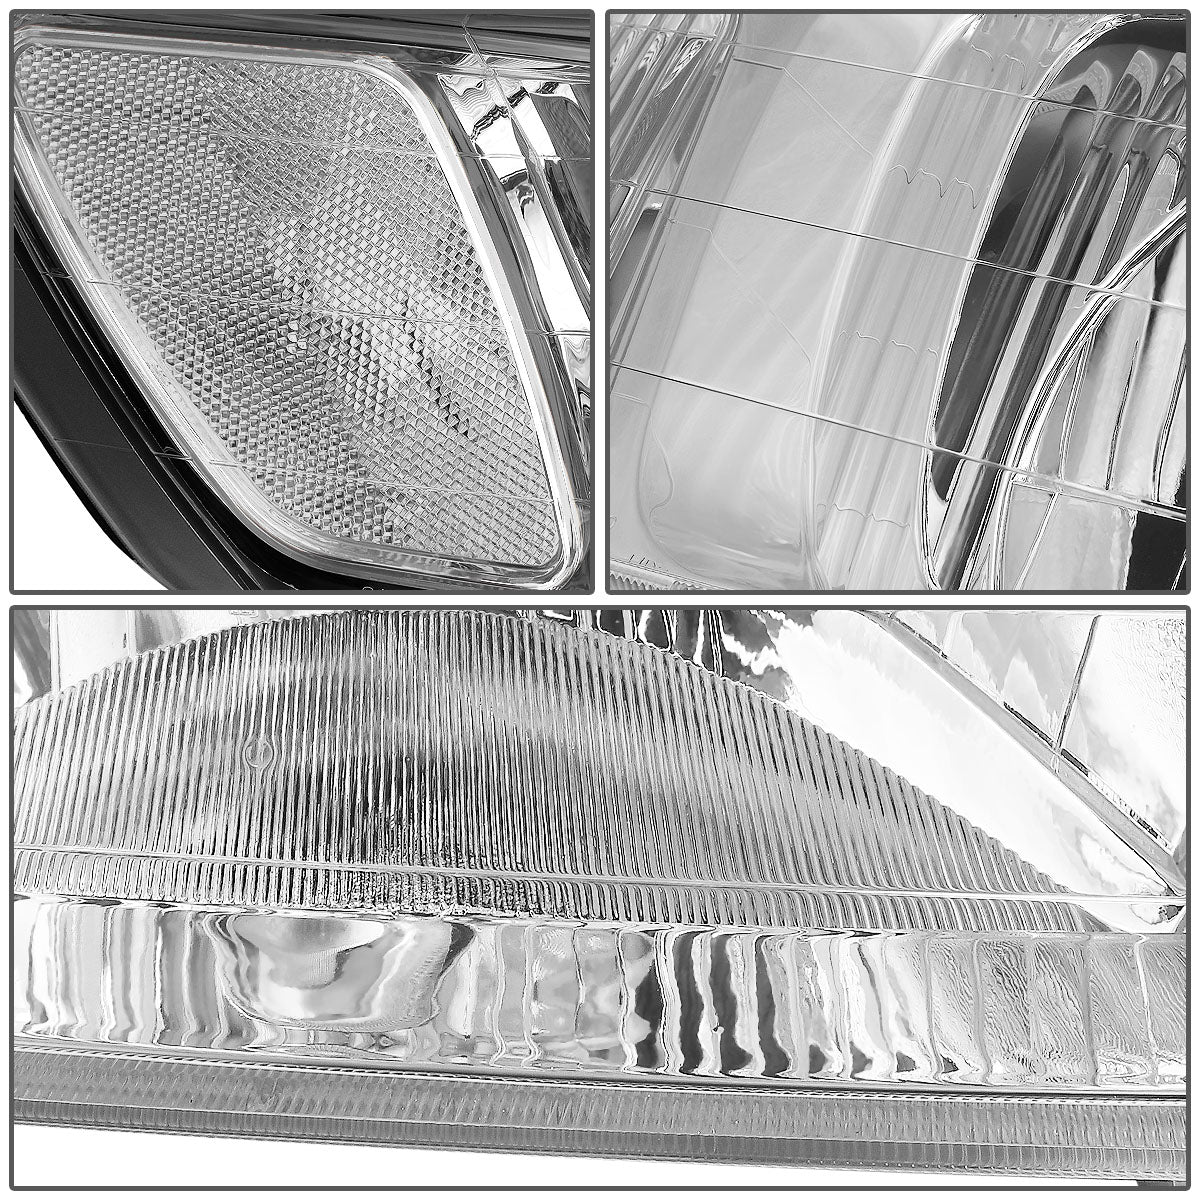 Factory Style Headlights<br>99-04 Honda Odyssey